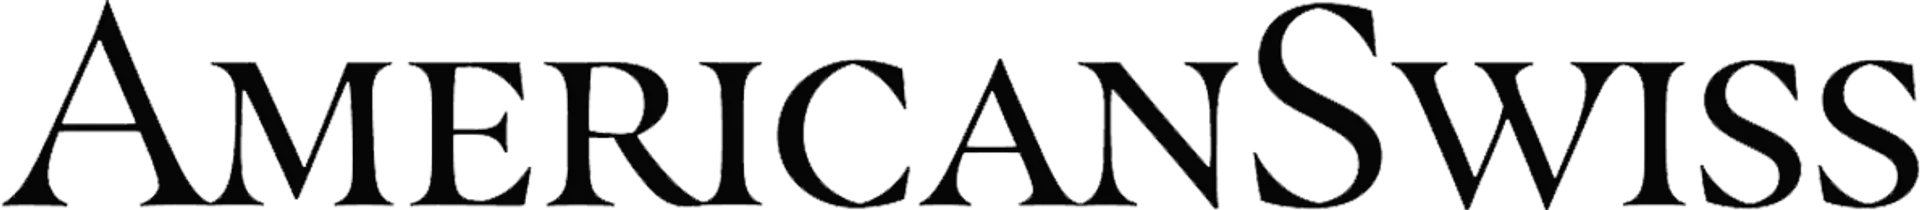 AMERICAN SWISS logo